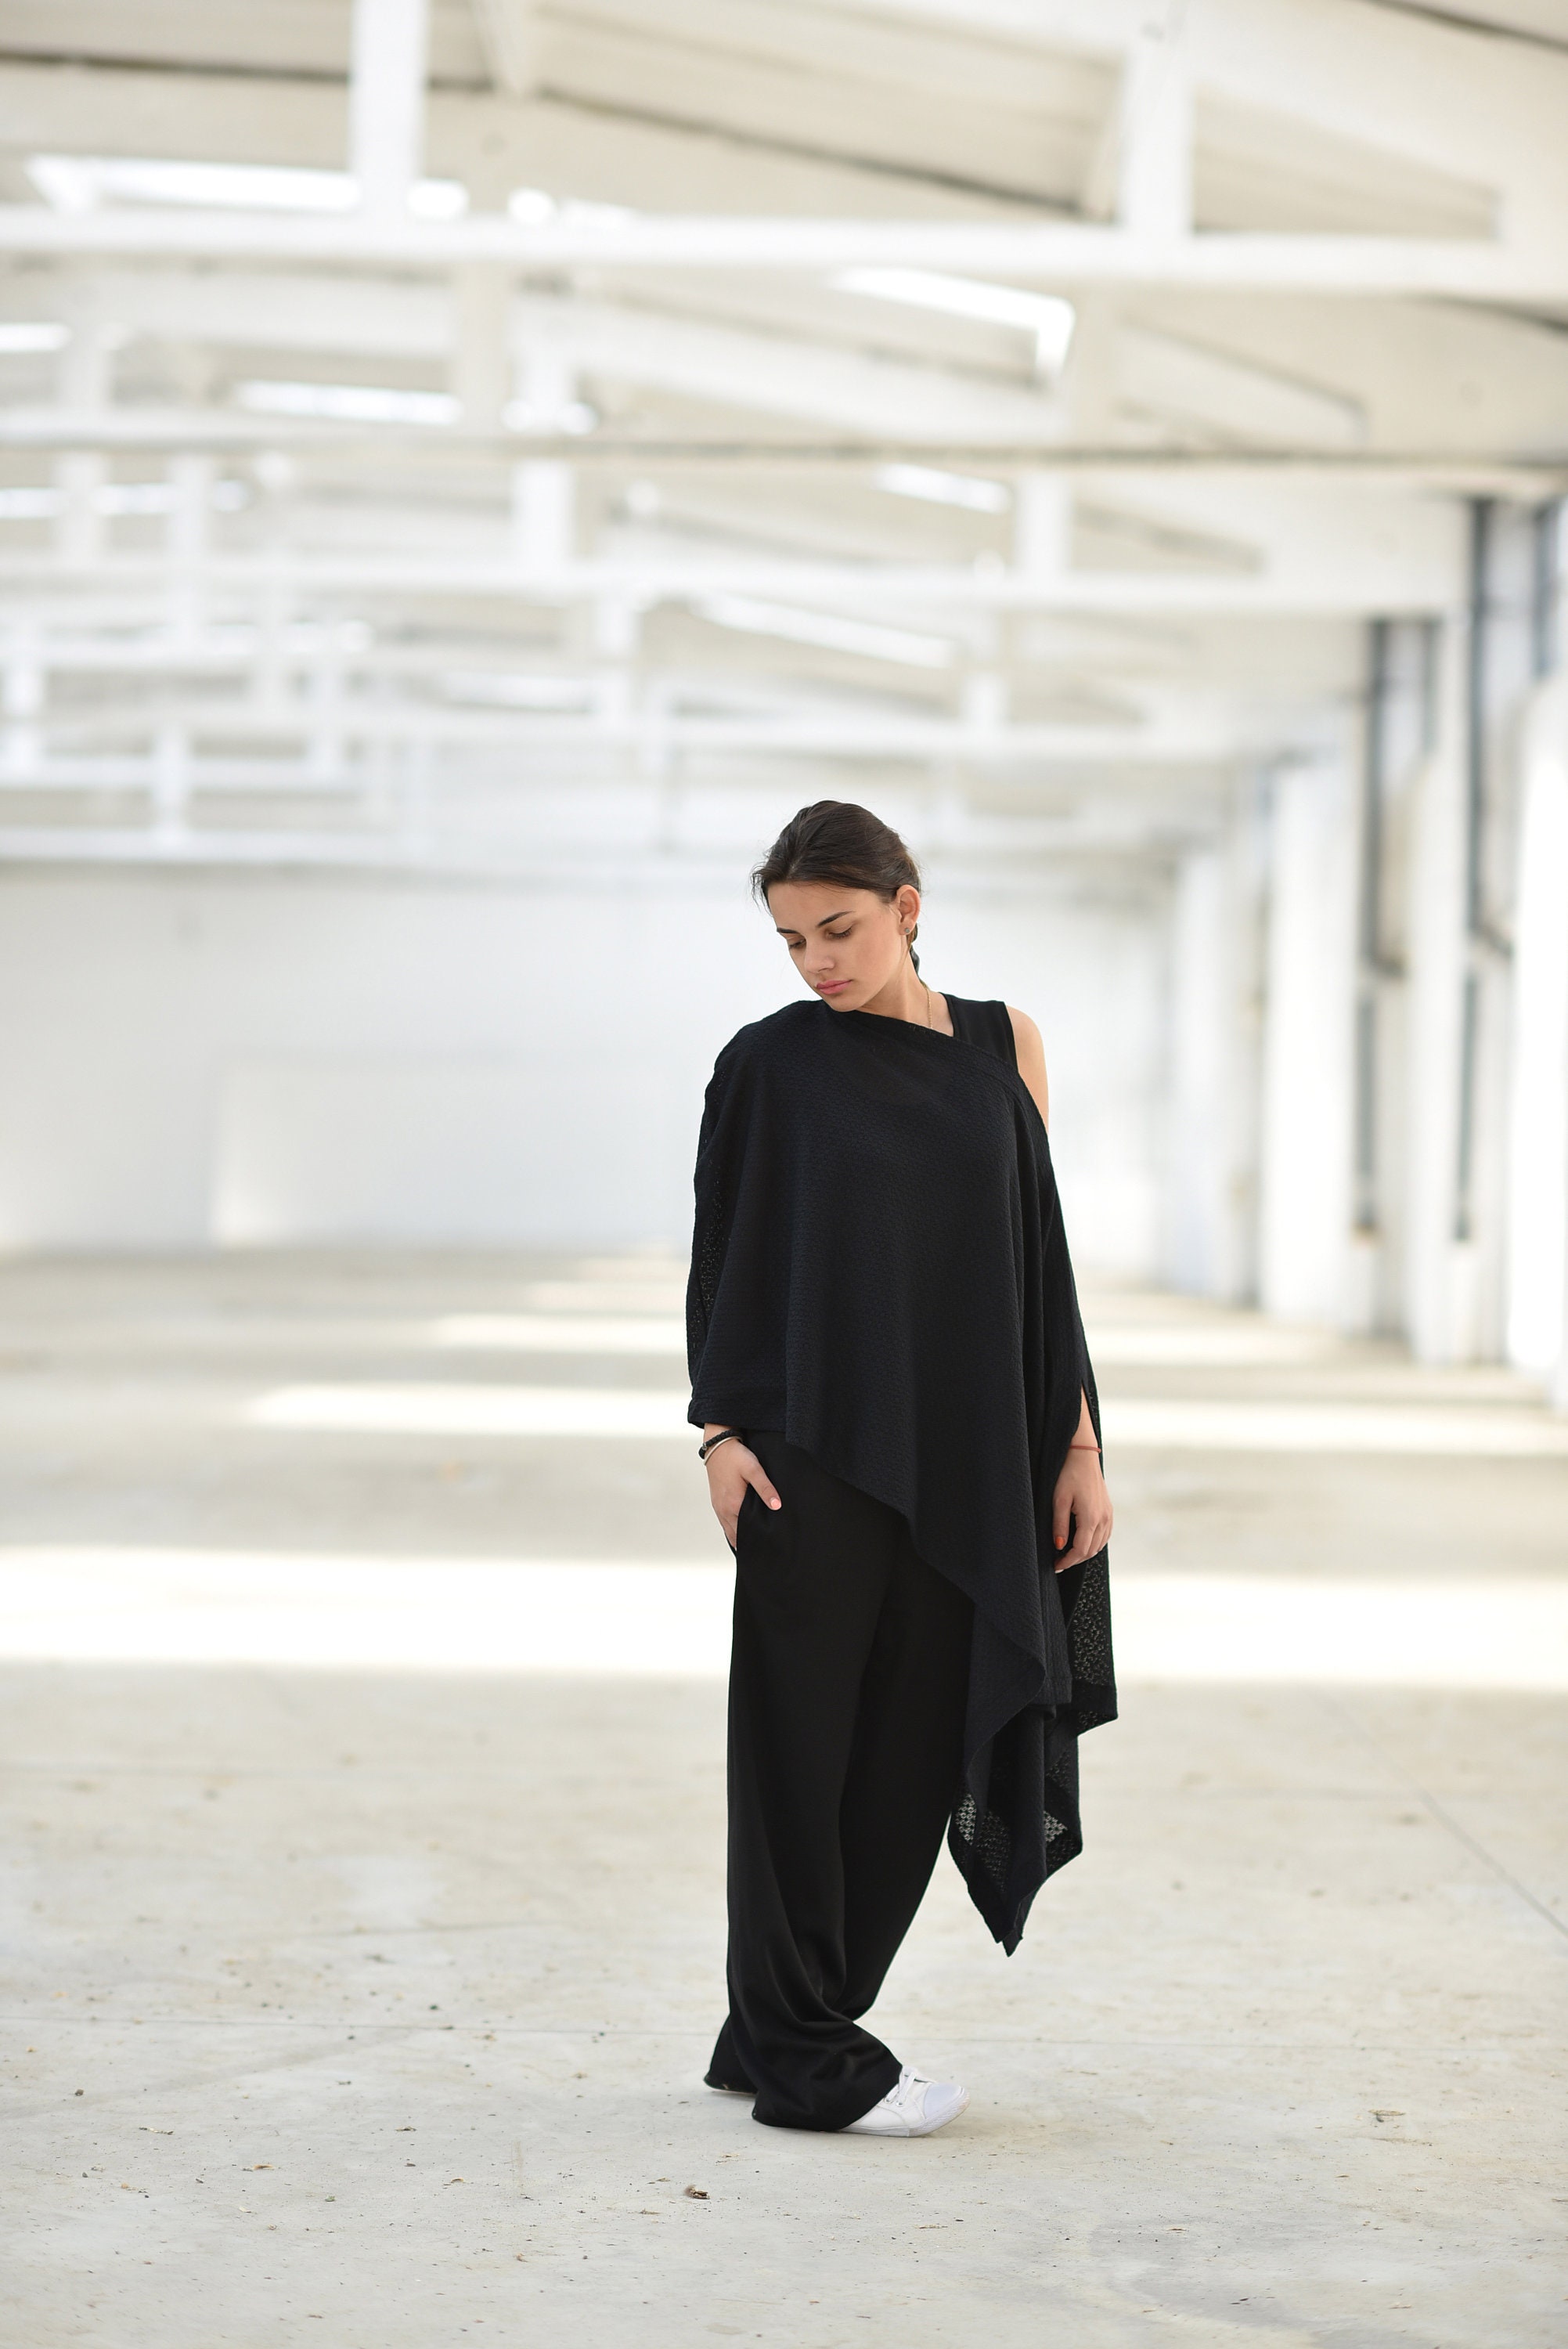 Women Poncho Cape Overall Plus Size Clothing Black Poncho | Etsy